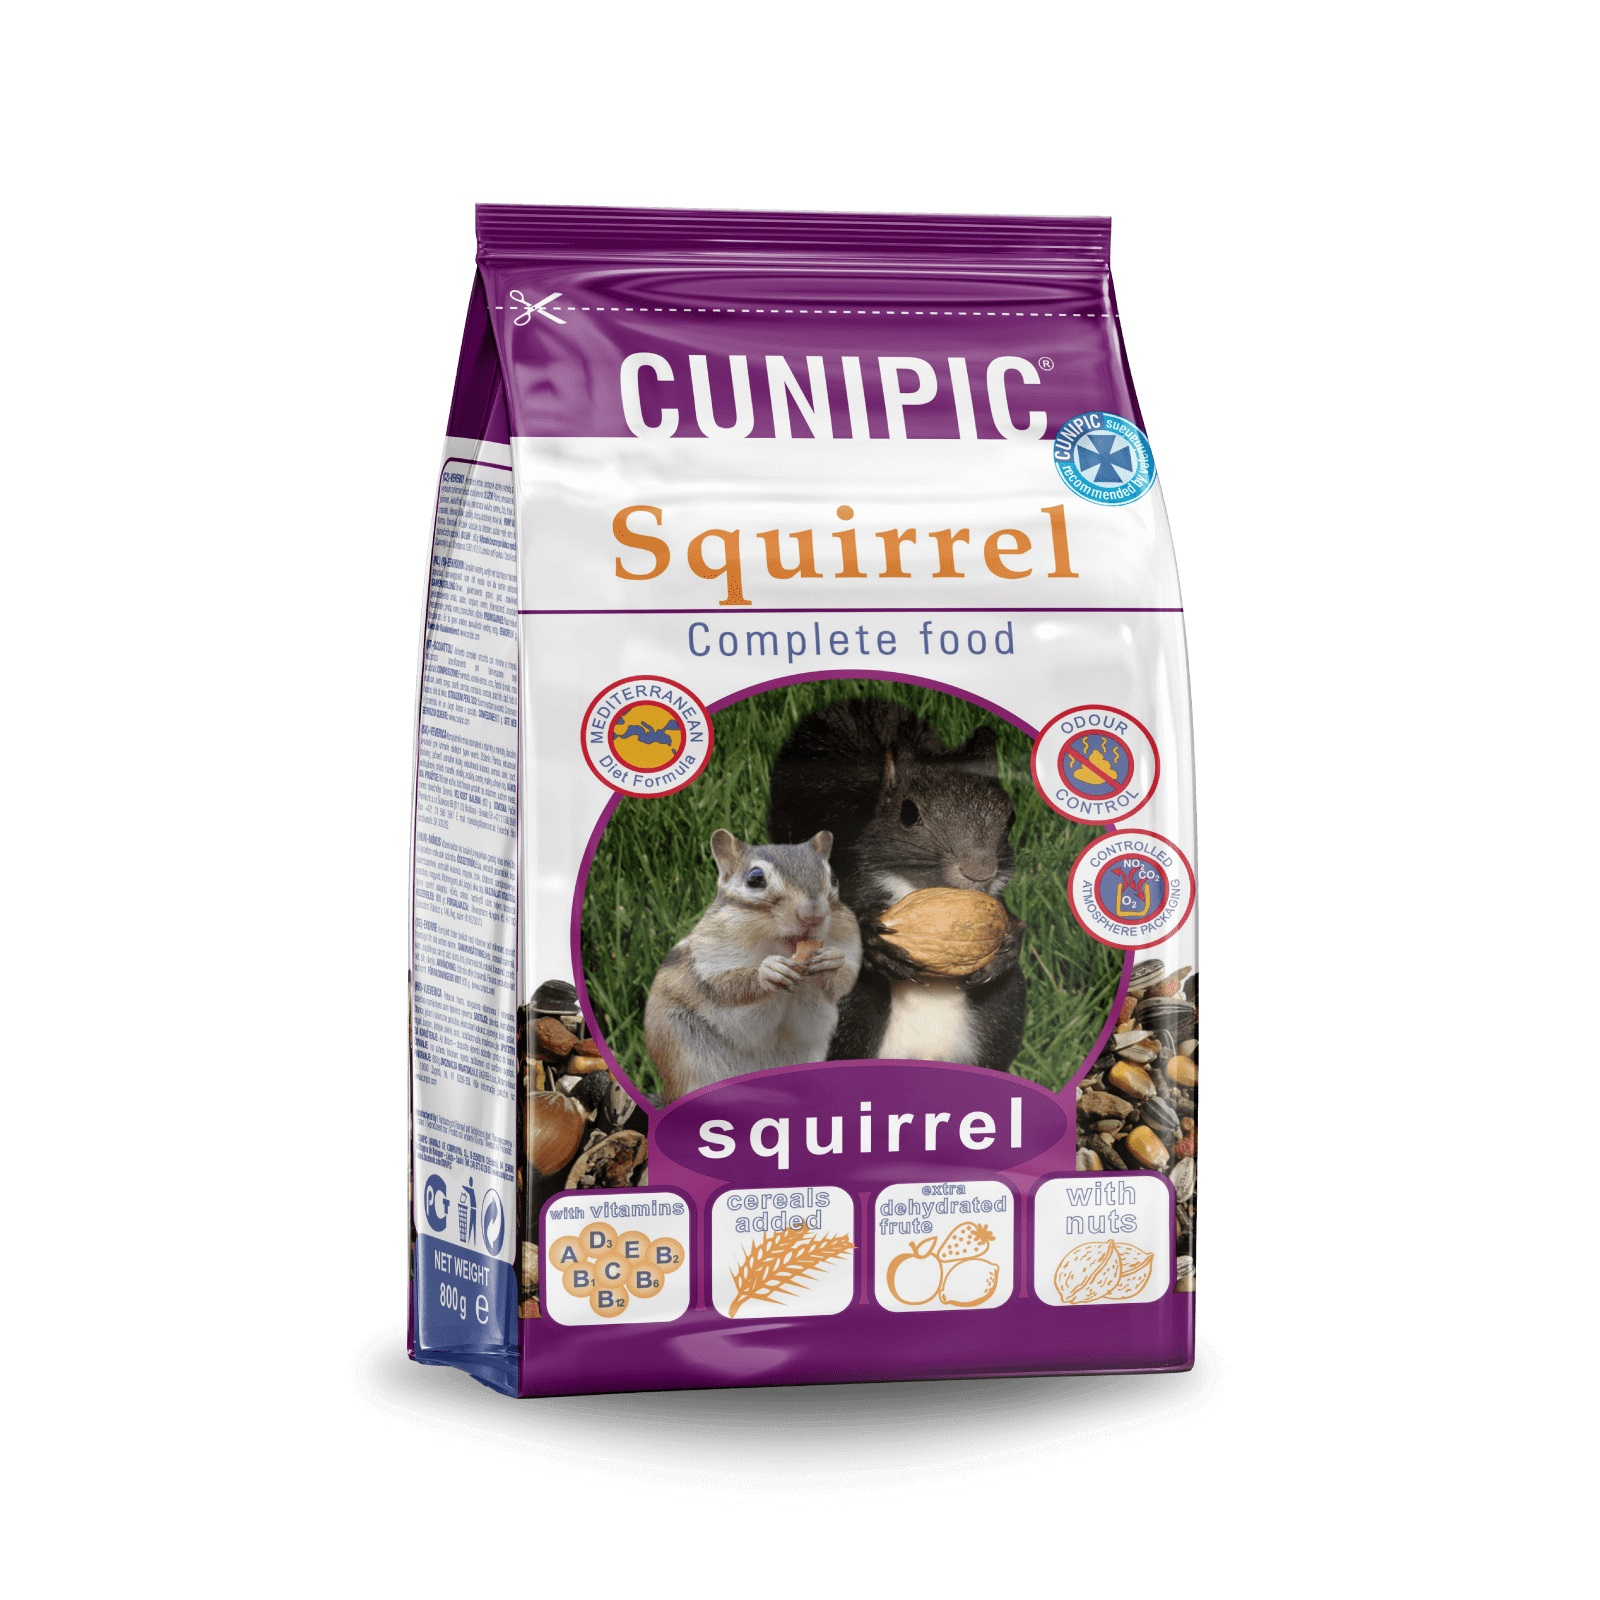 Cunipic Premium Squirrel Aliment complet écureuil